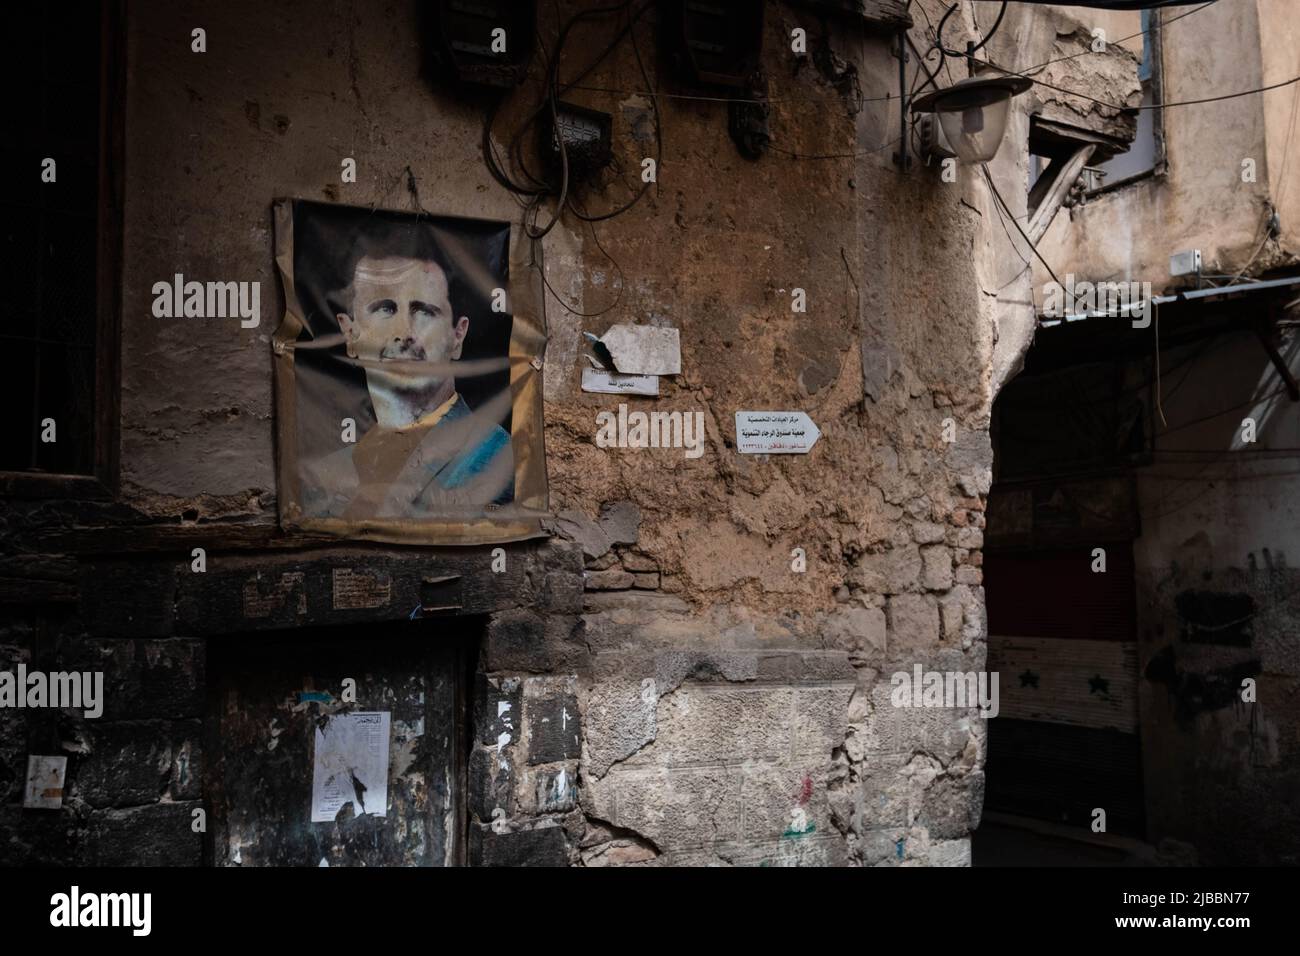 Damascus, Syria -May, 2022: Portrait image of Bashar al-Assad, President of Syria Stock Photo